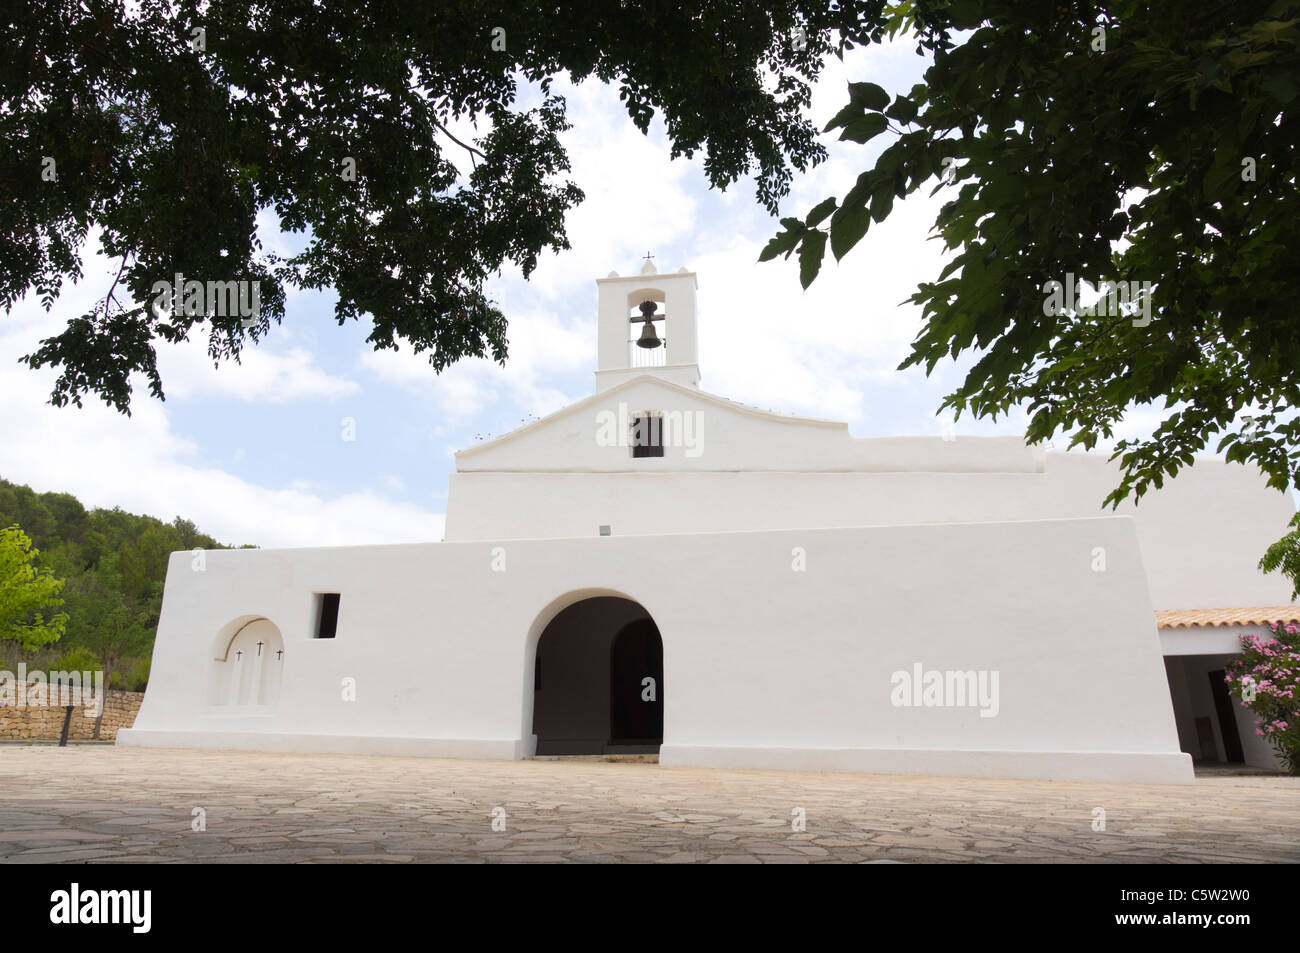 Ibiza, Balearics, Spain - Sant Llorenc de Balafia. The white church. Stock Photo